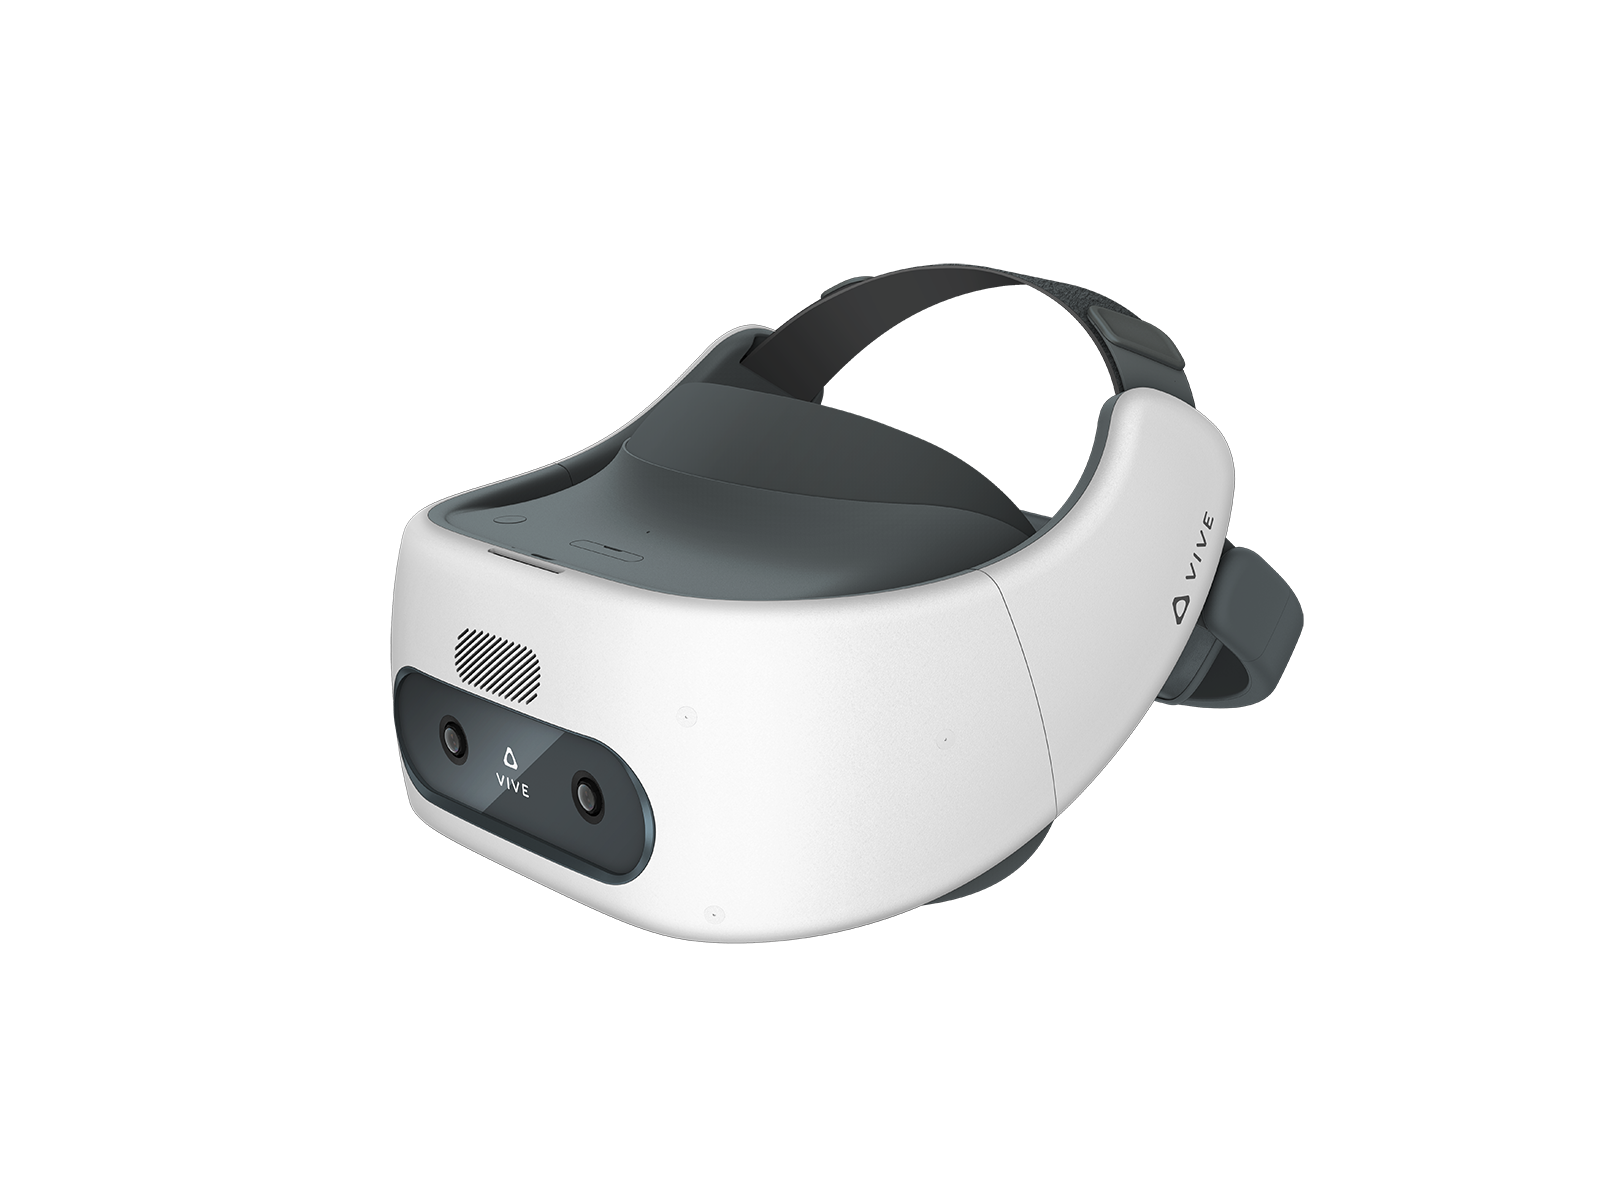 HTC VIVE najavio naglavni VR set Focus Plus - VR headset @ Bug.hr